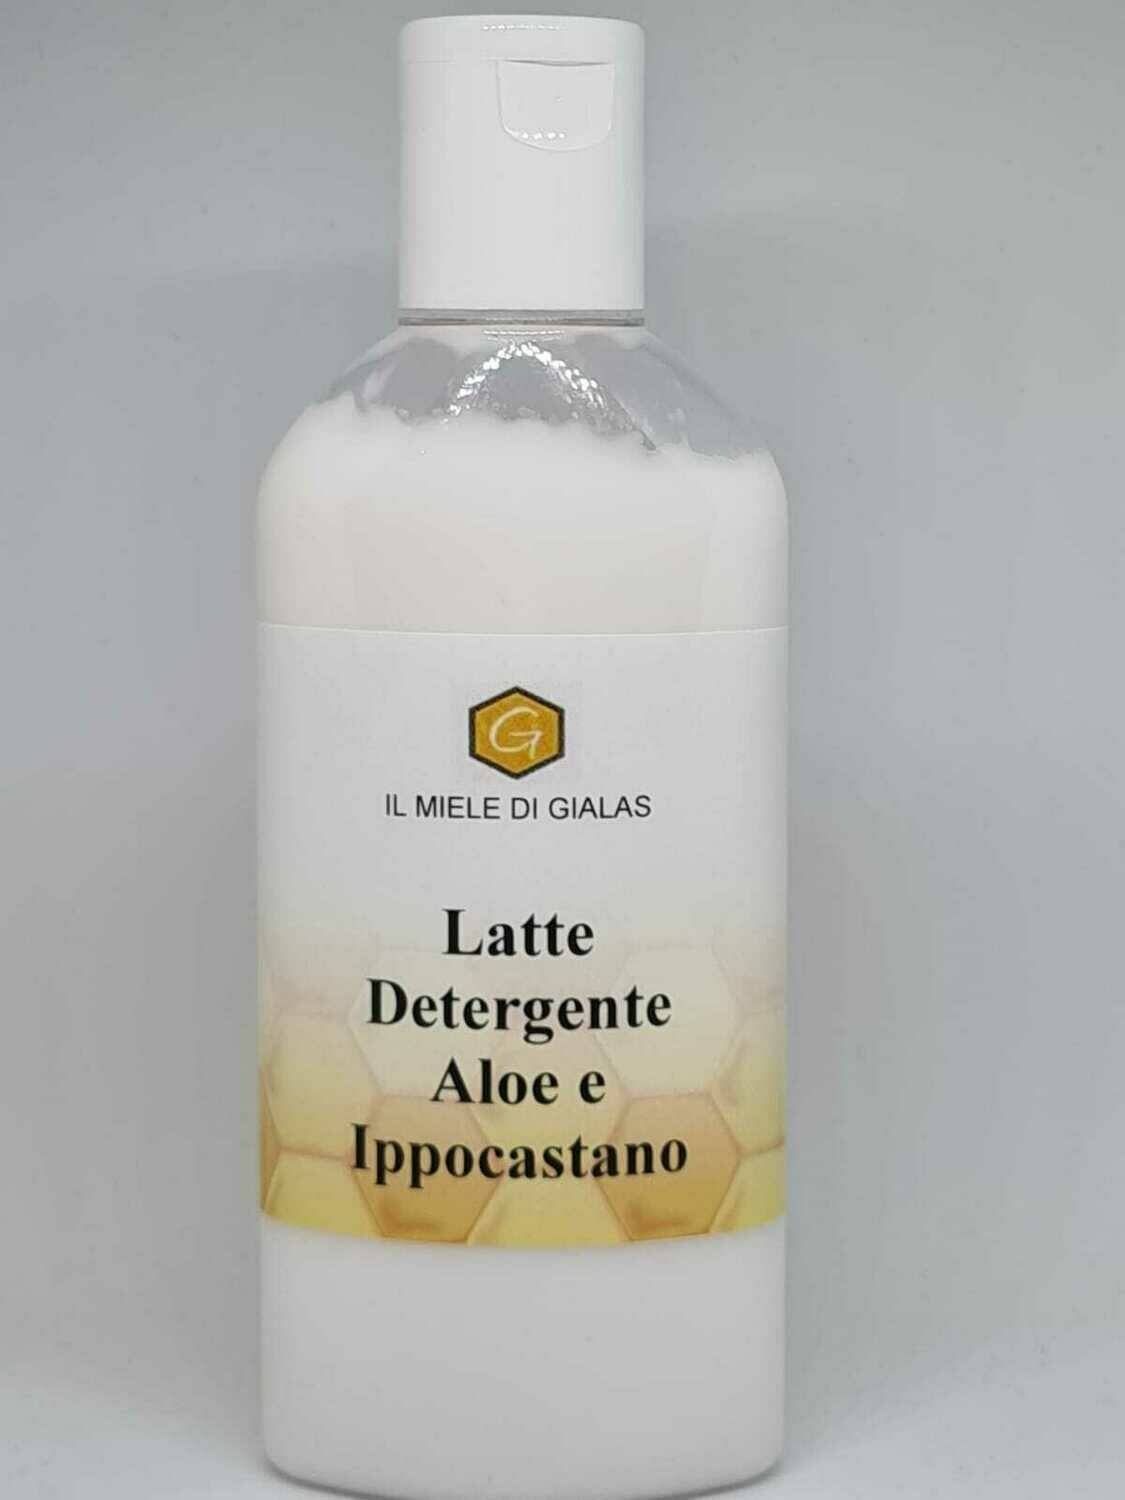 Latte detergente all'Aloe e Ippocastano